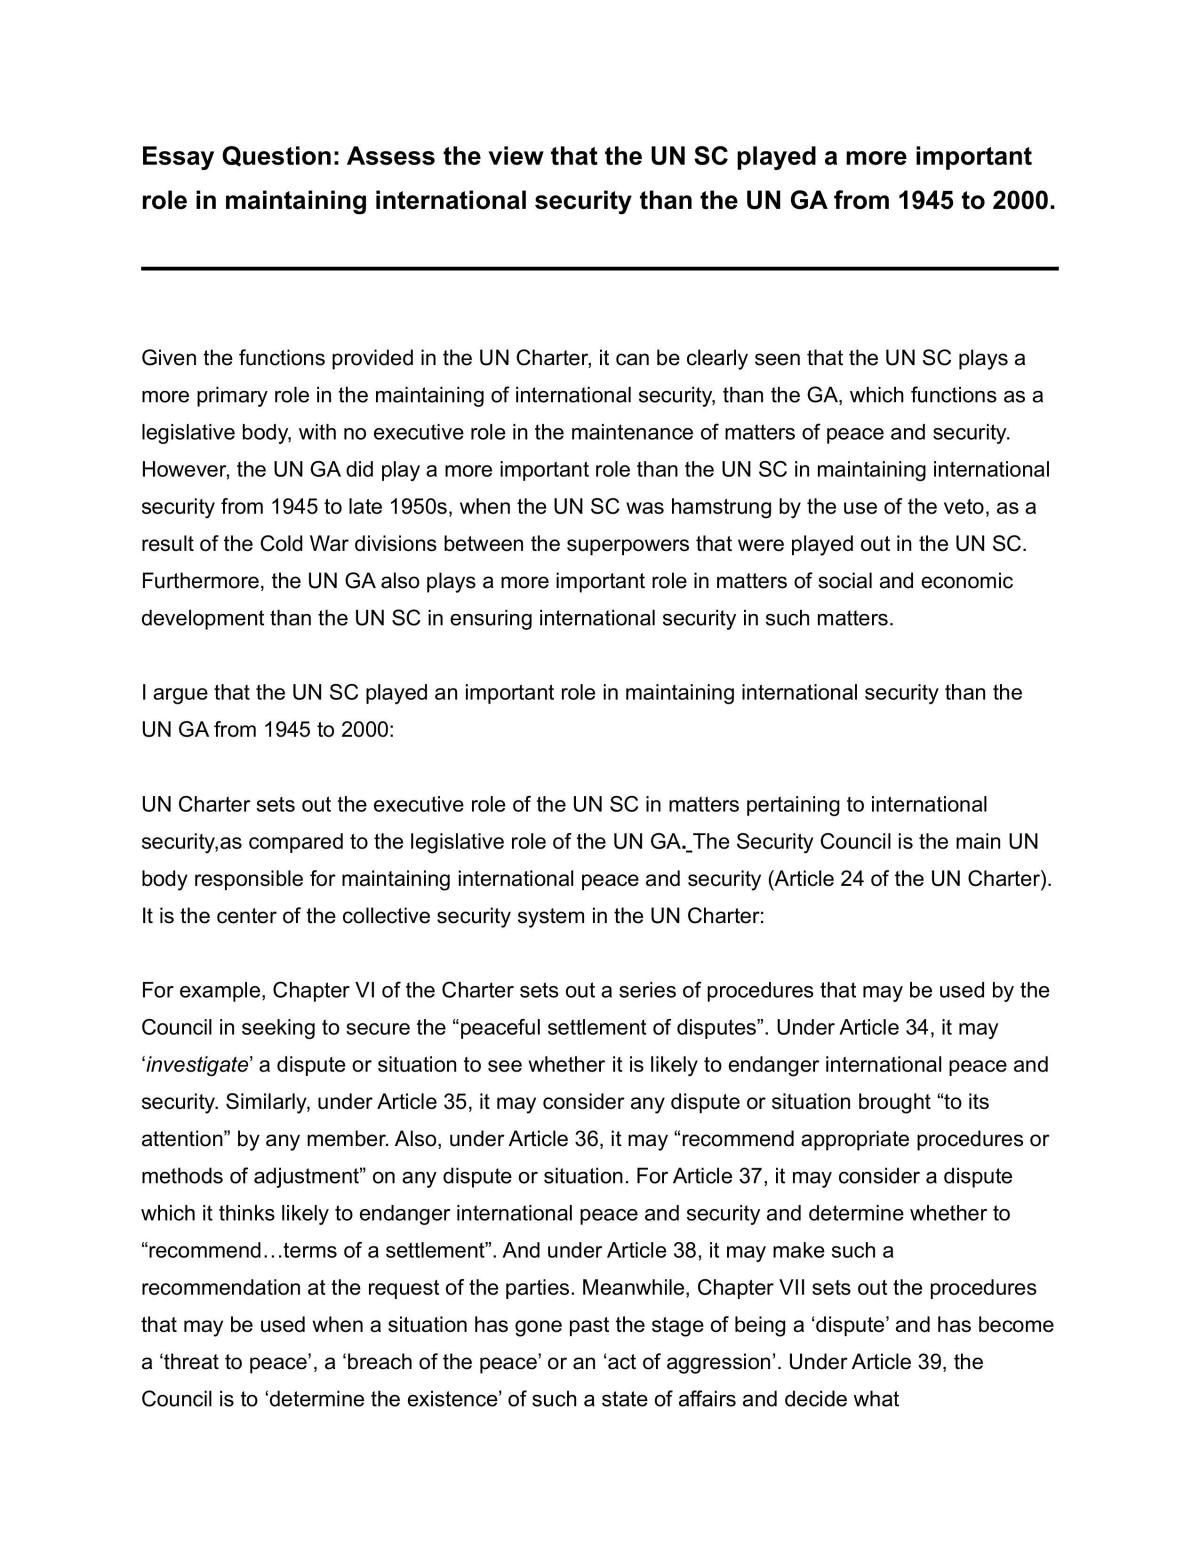 UN SC vs UN GA for international security History H2 GCE A Level